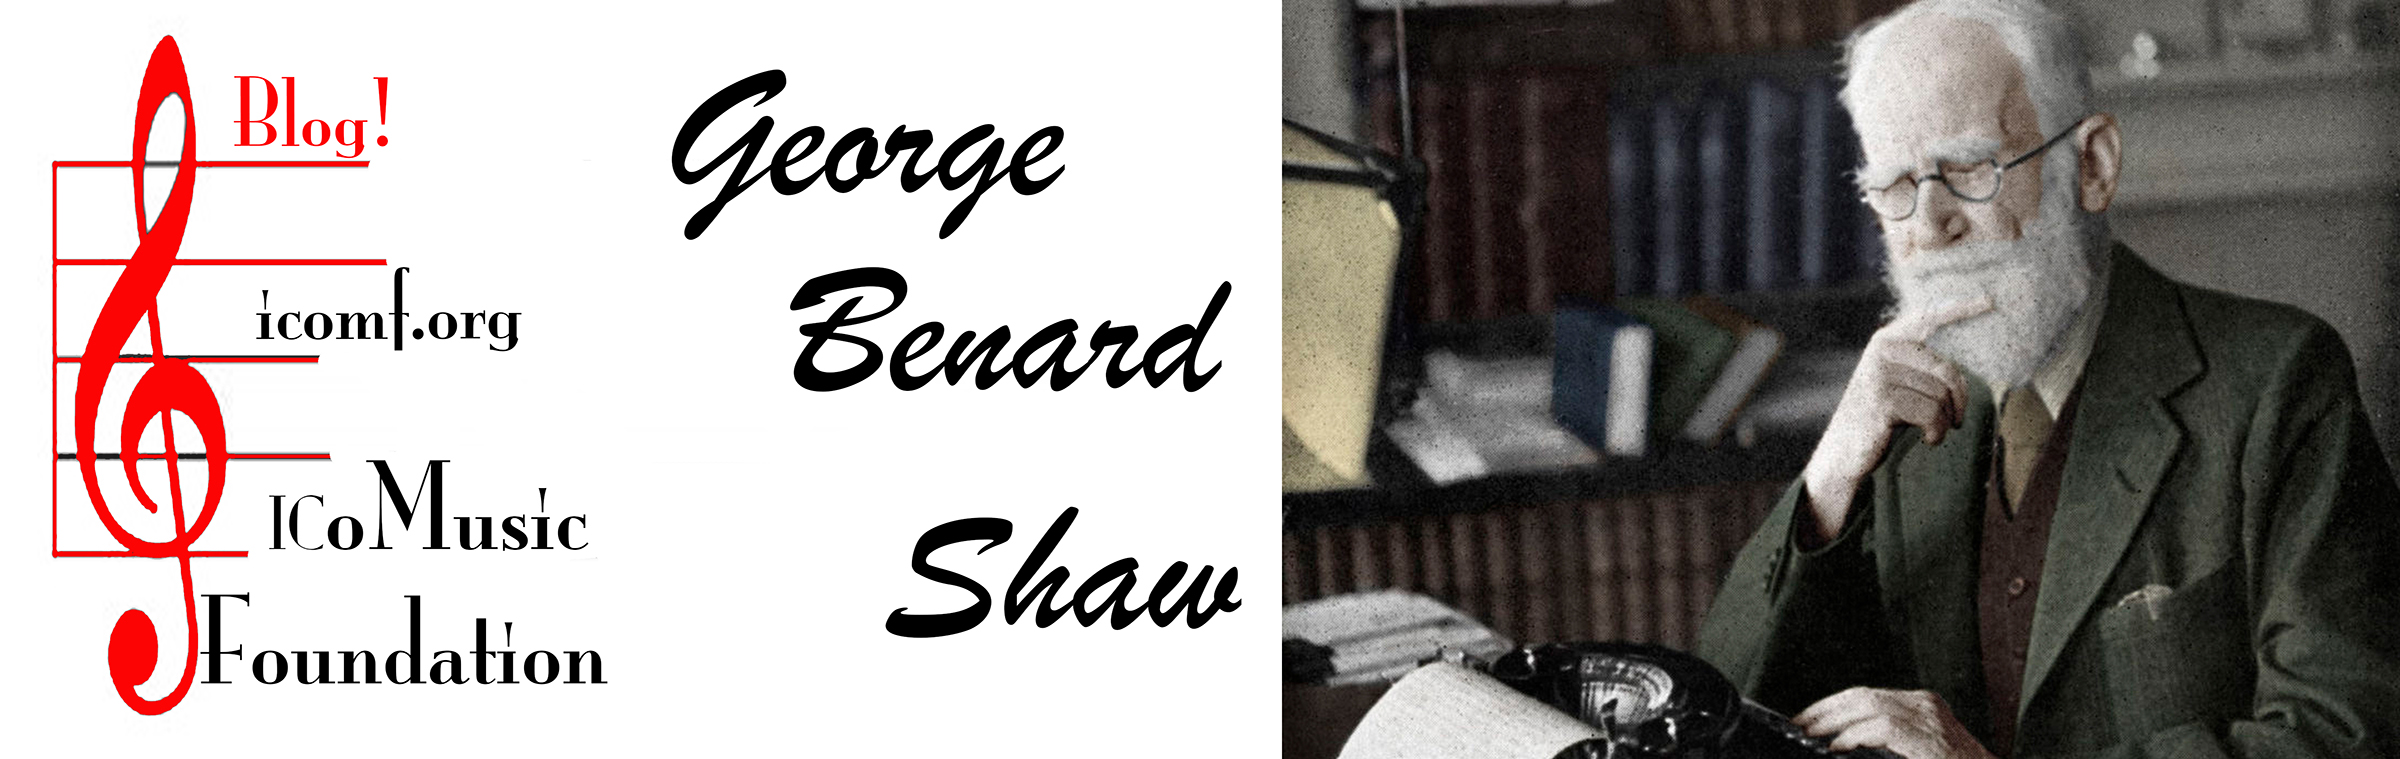 George Benard Shaw Blog Banner